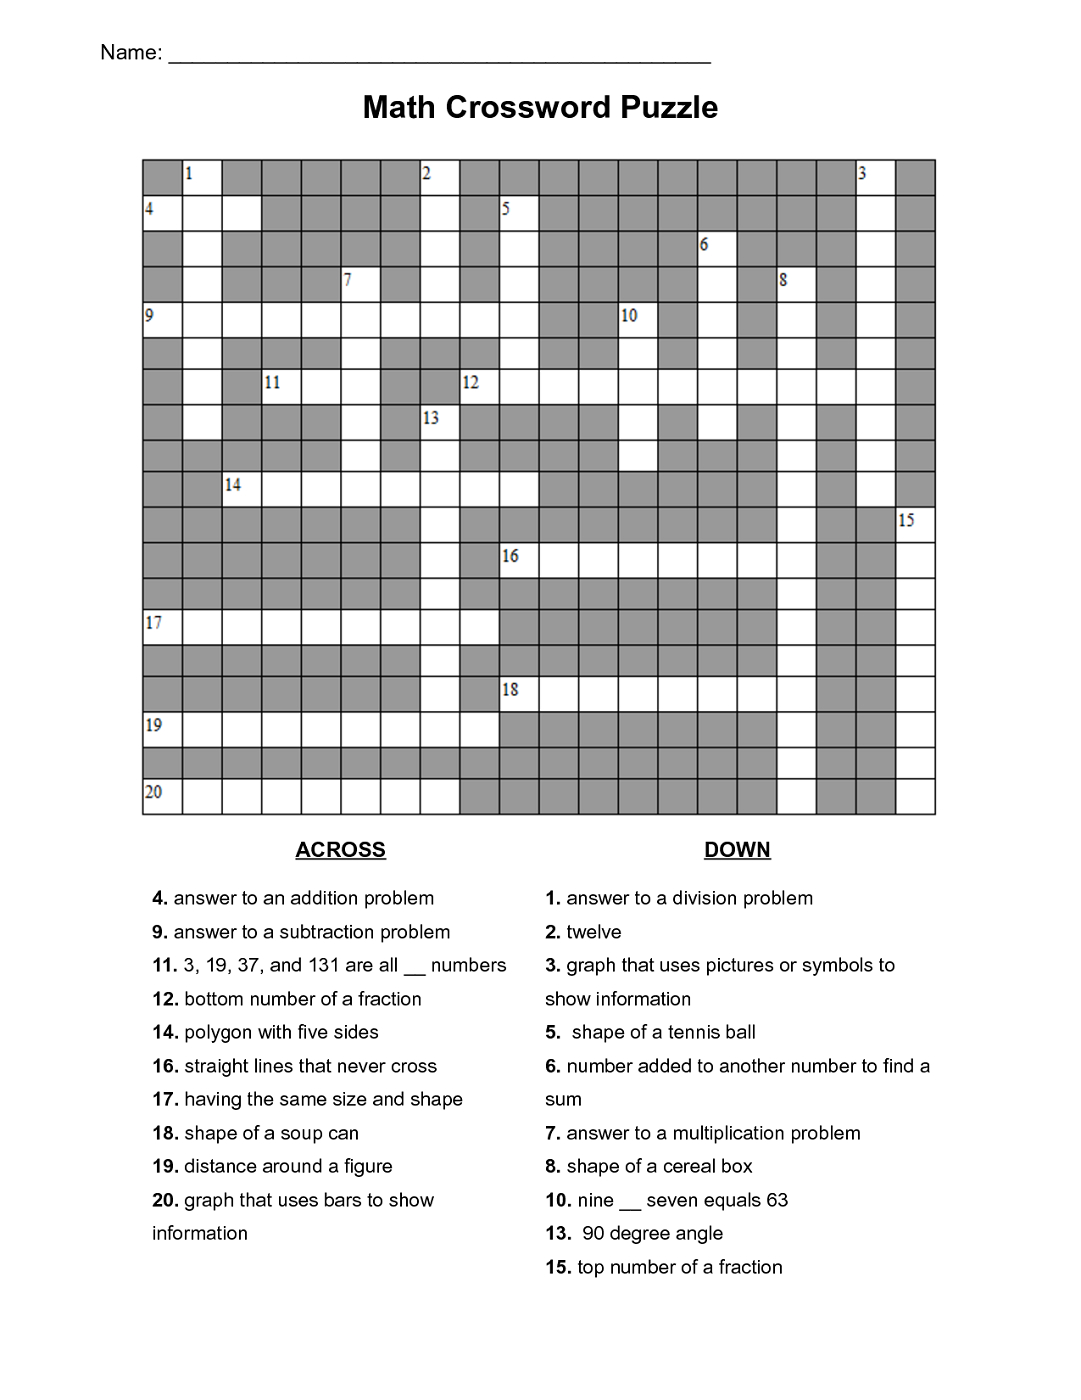 Maths Puzzles For Kids Crossword | Activities | Maths Puzzles, Kids - Free Printable Crossword Puzzle #7 Answers